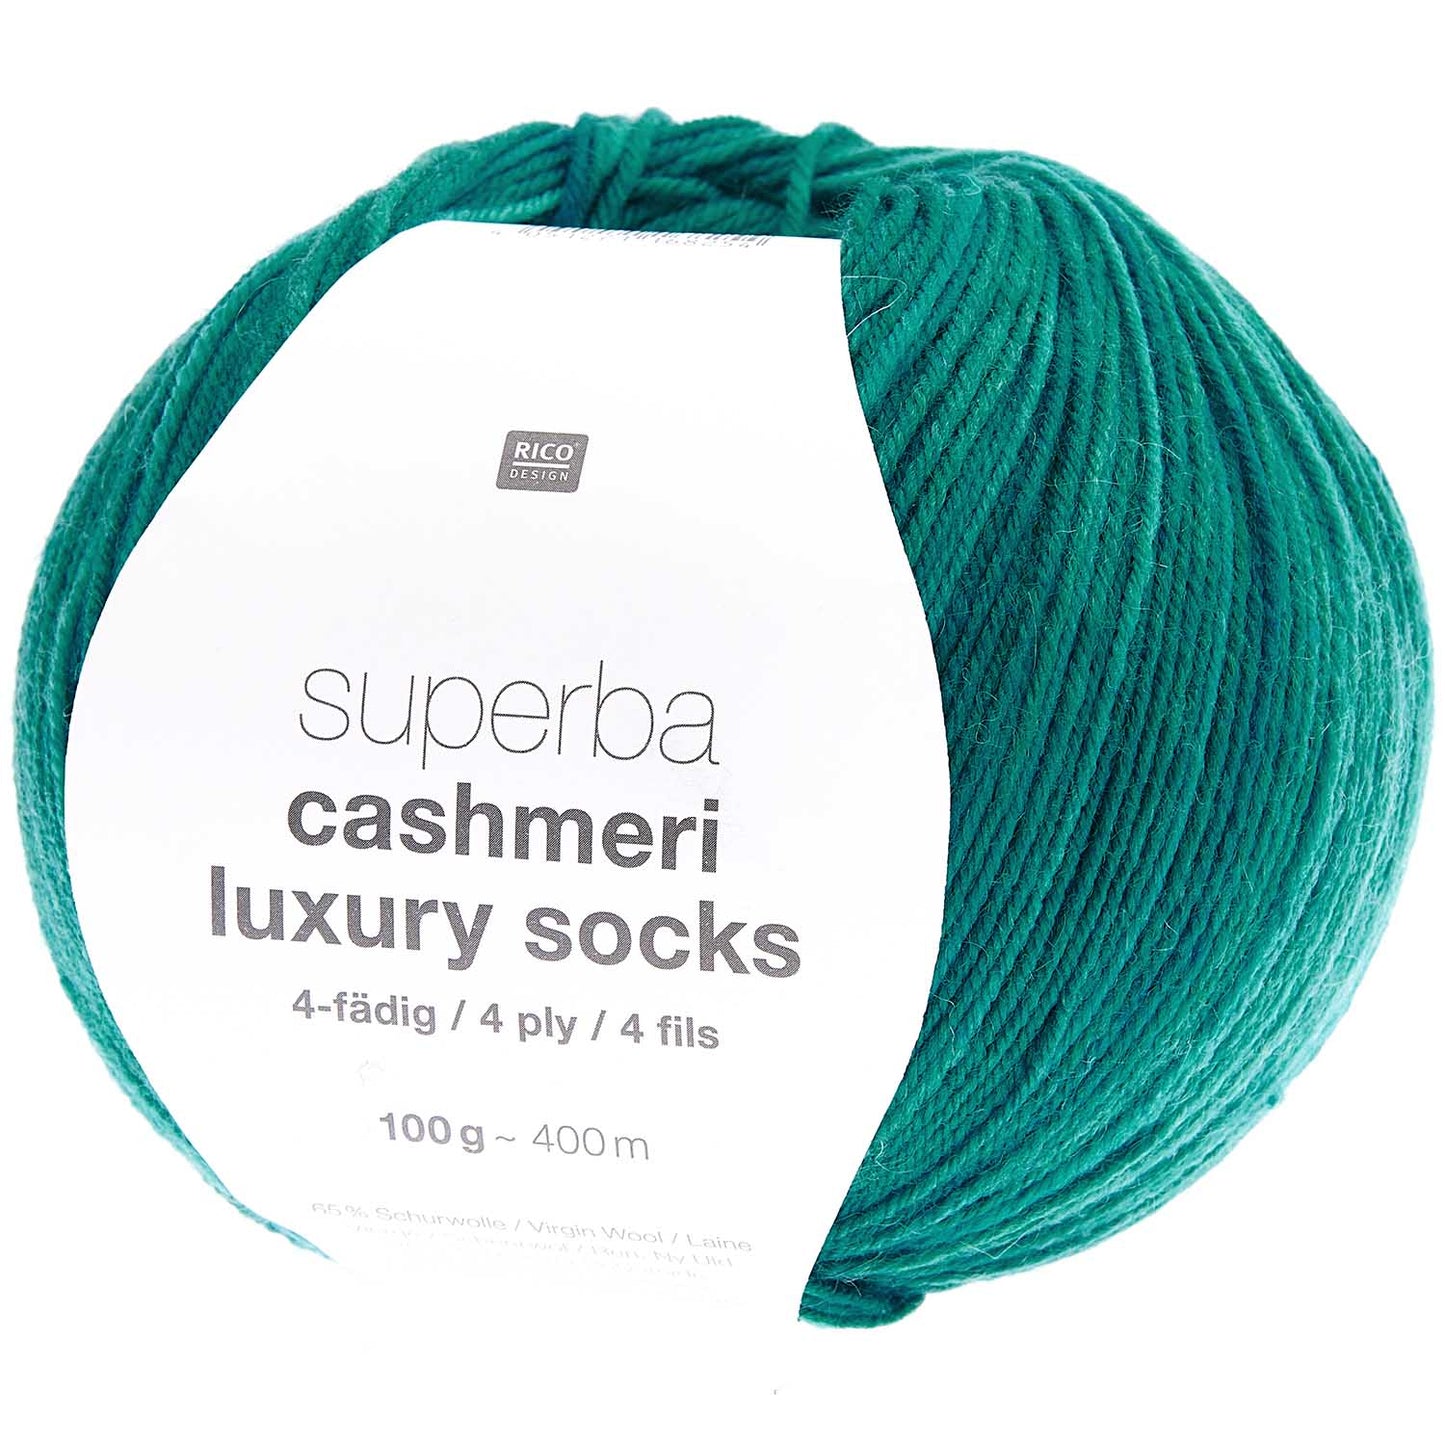 Superba Cashmeri Luxury Socks | Rico Design